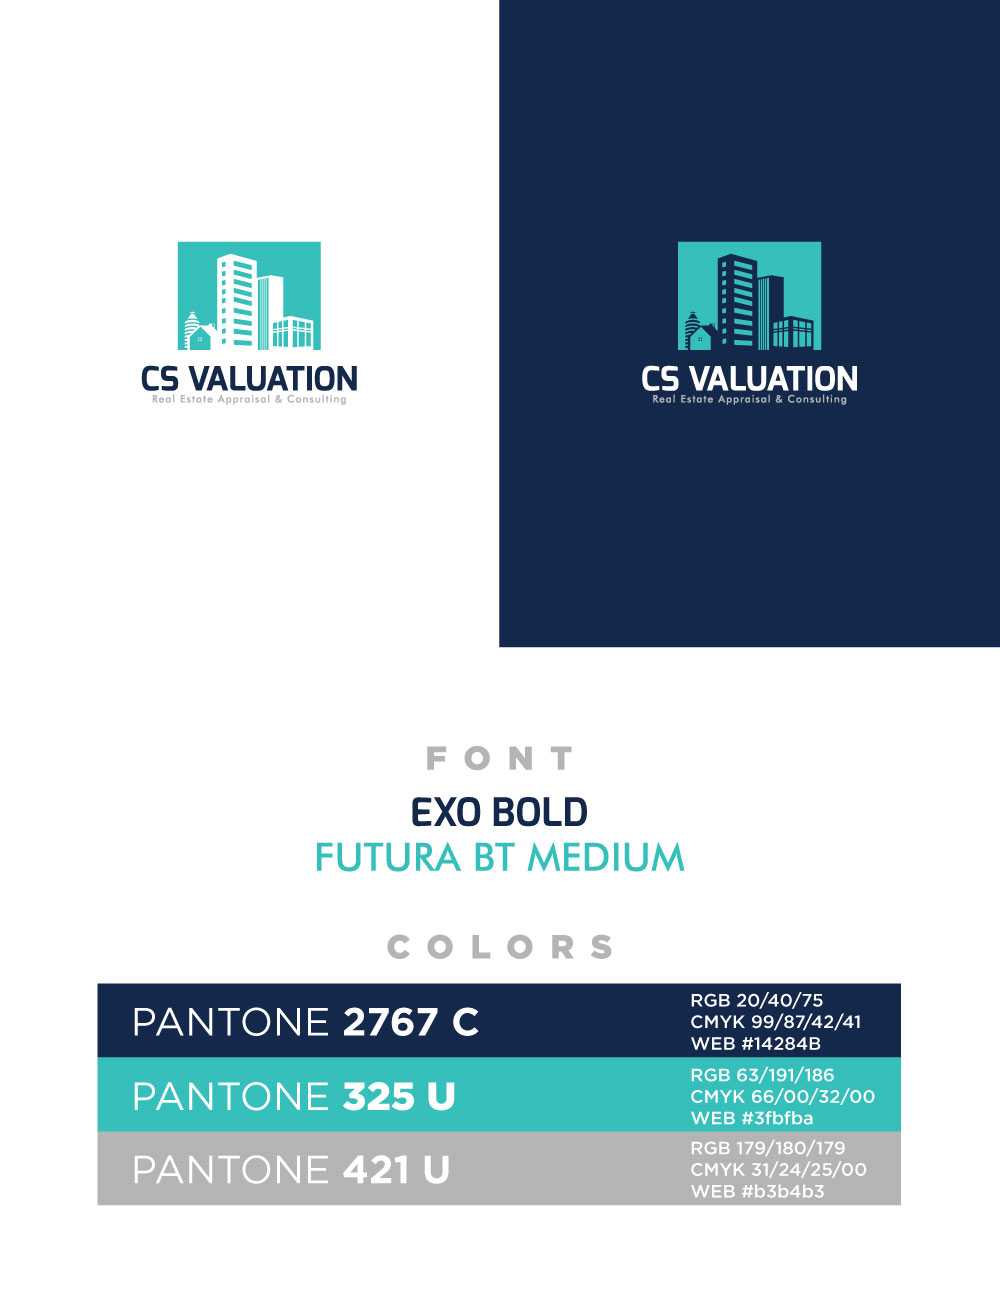 CS Valuation Logo